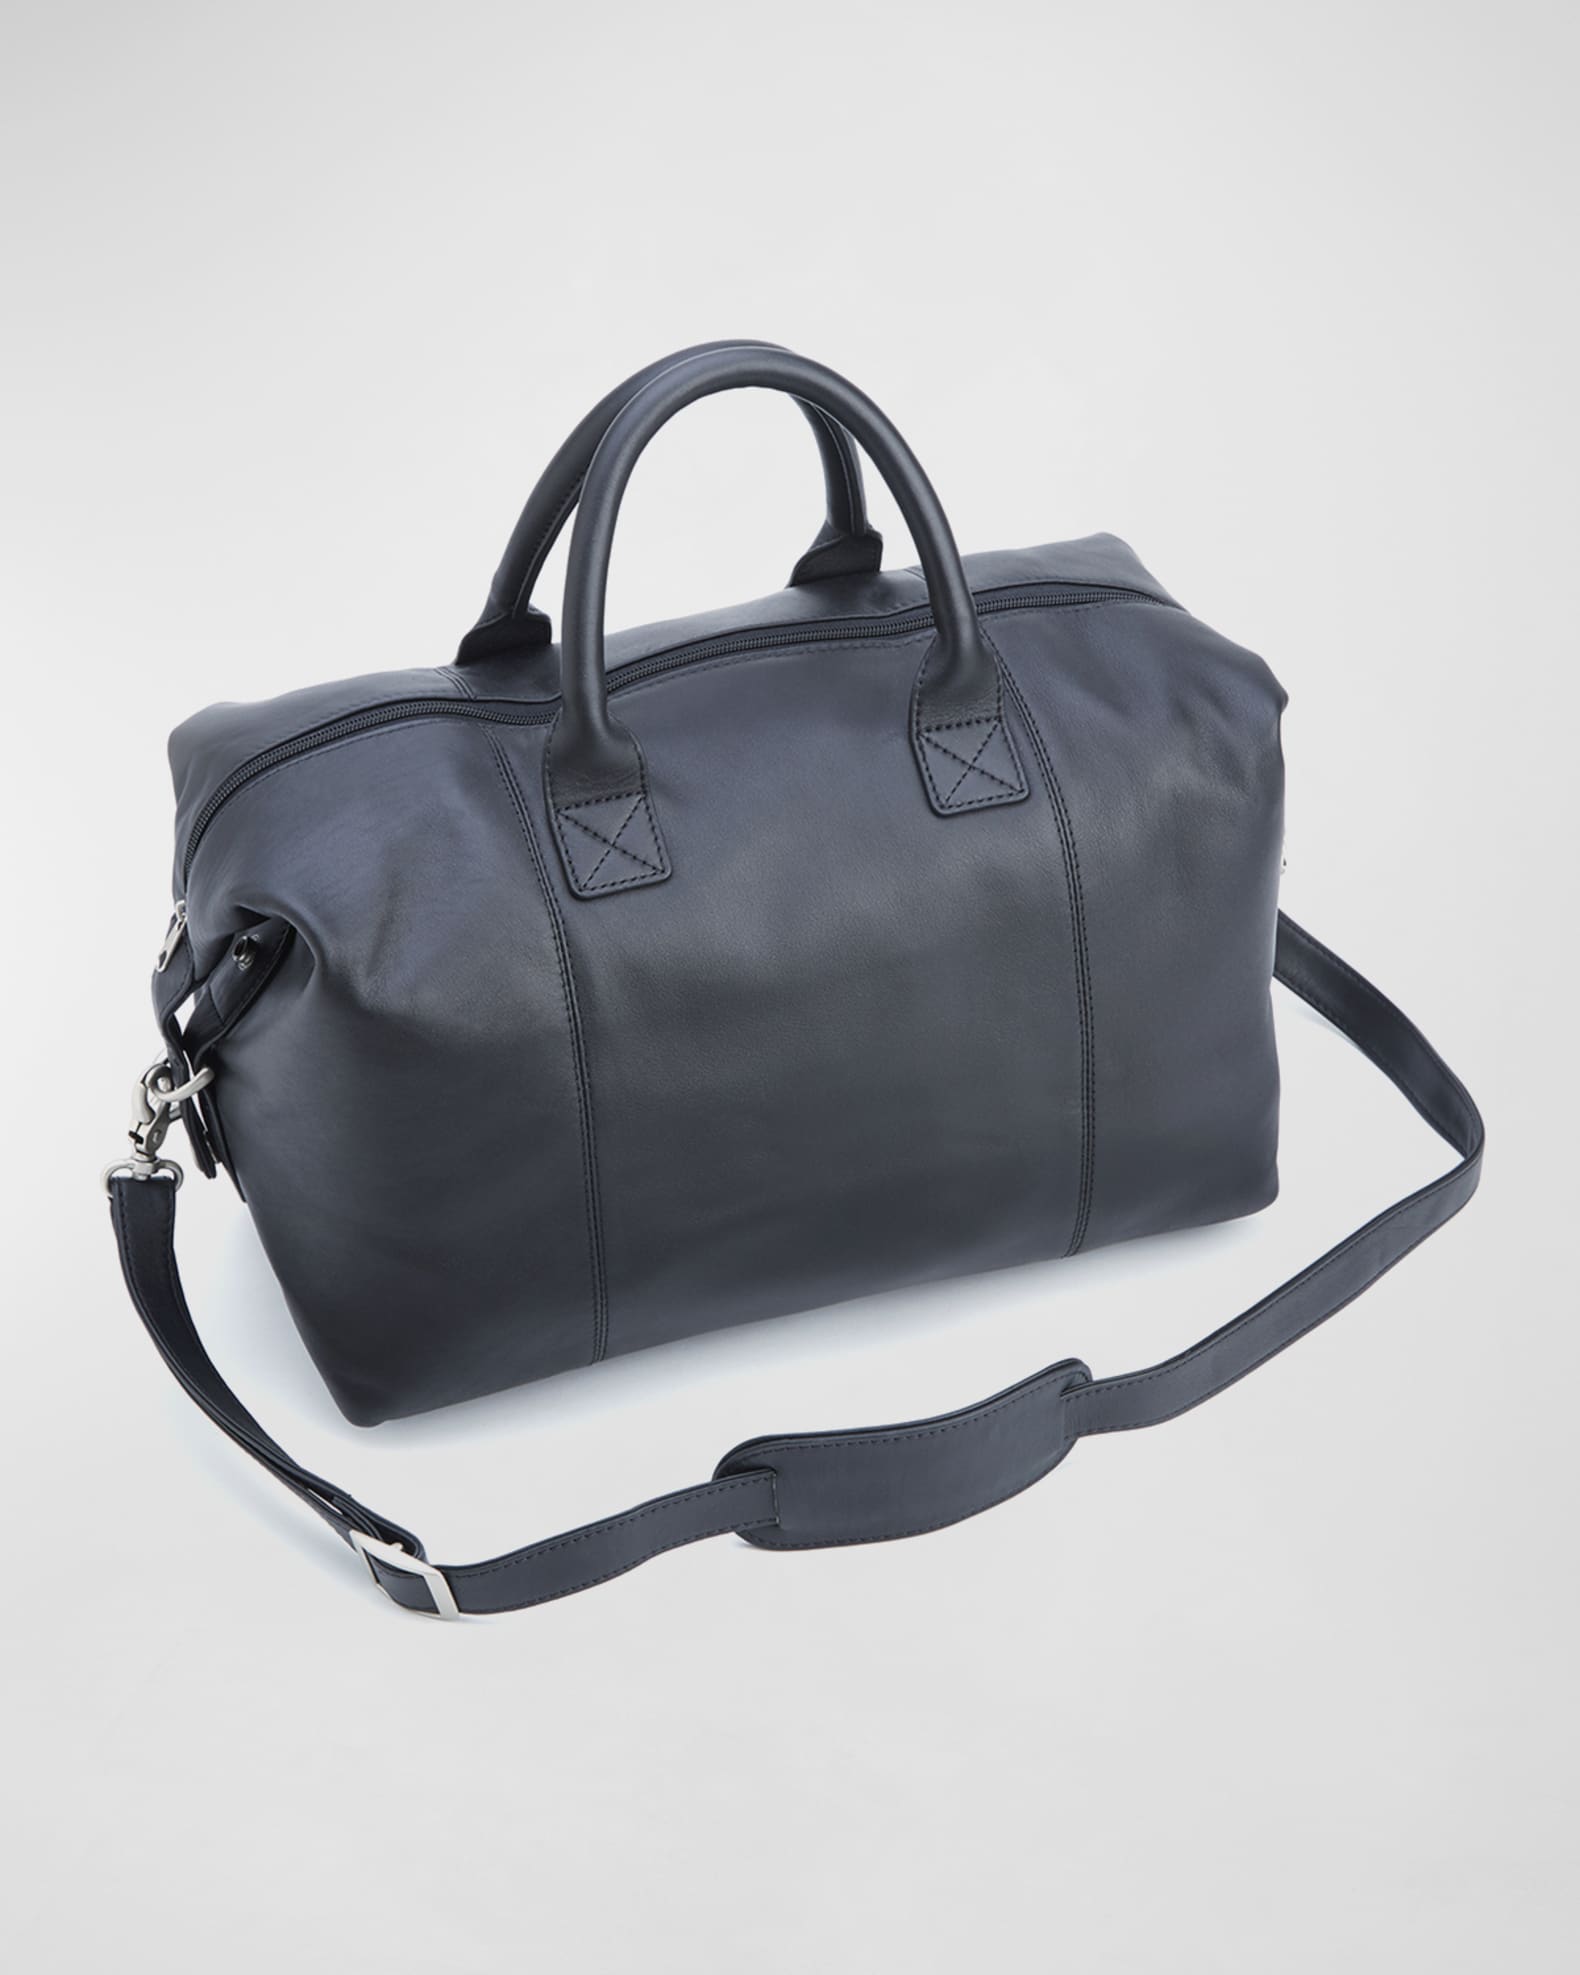 Luxury Duffel Bag Black Leather